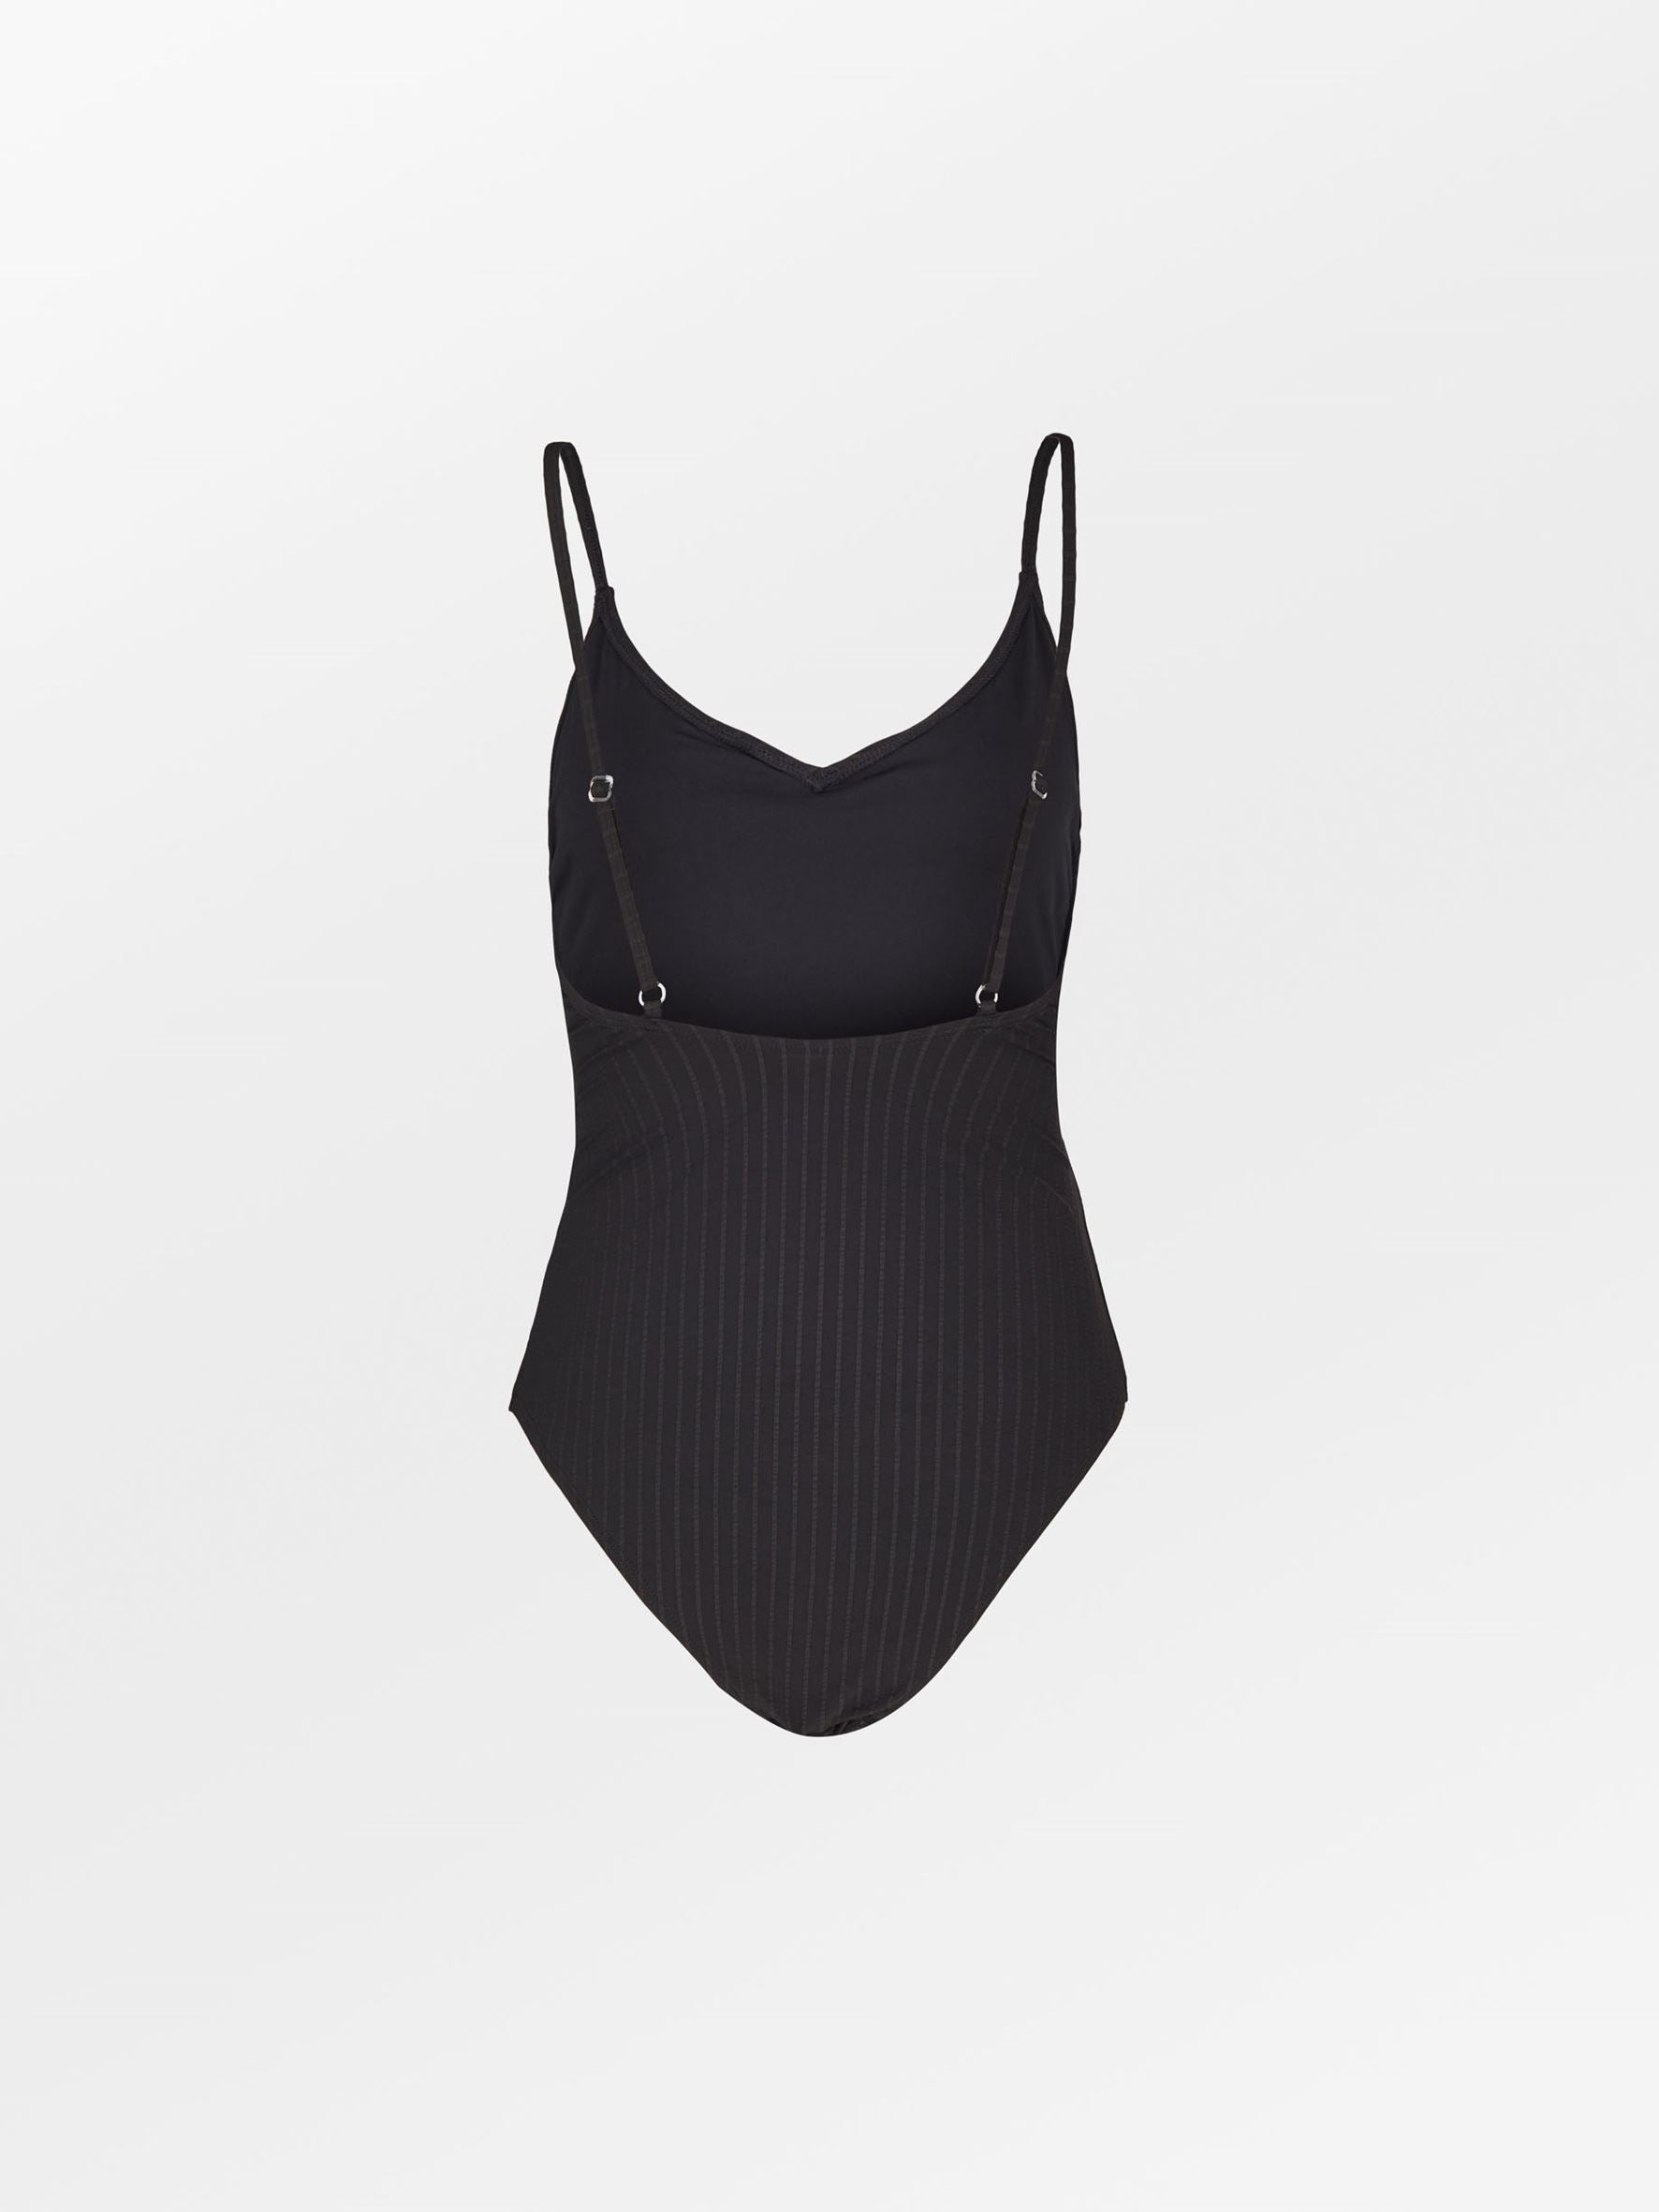 Becksöndergaard, Solid Bea Swimsuit - Black, archive, archive, sale, sale